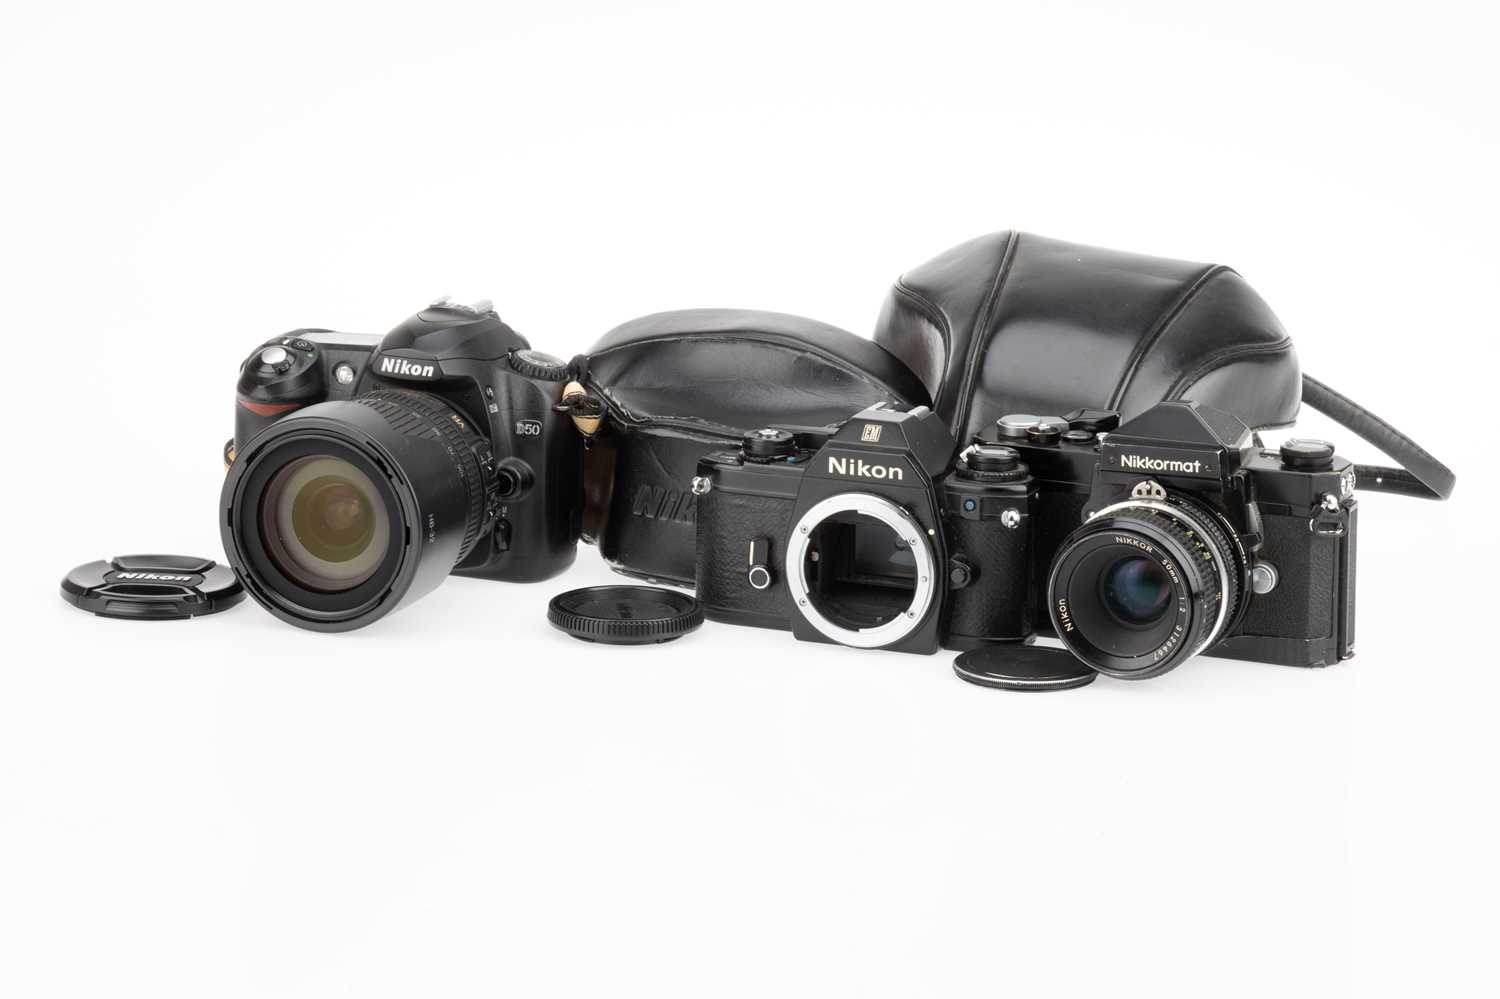 Lot 31 - Three Nikon SLR Cameras